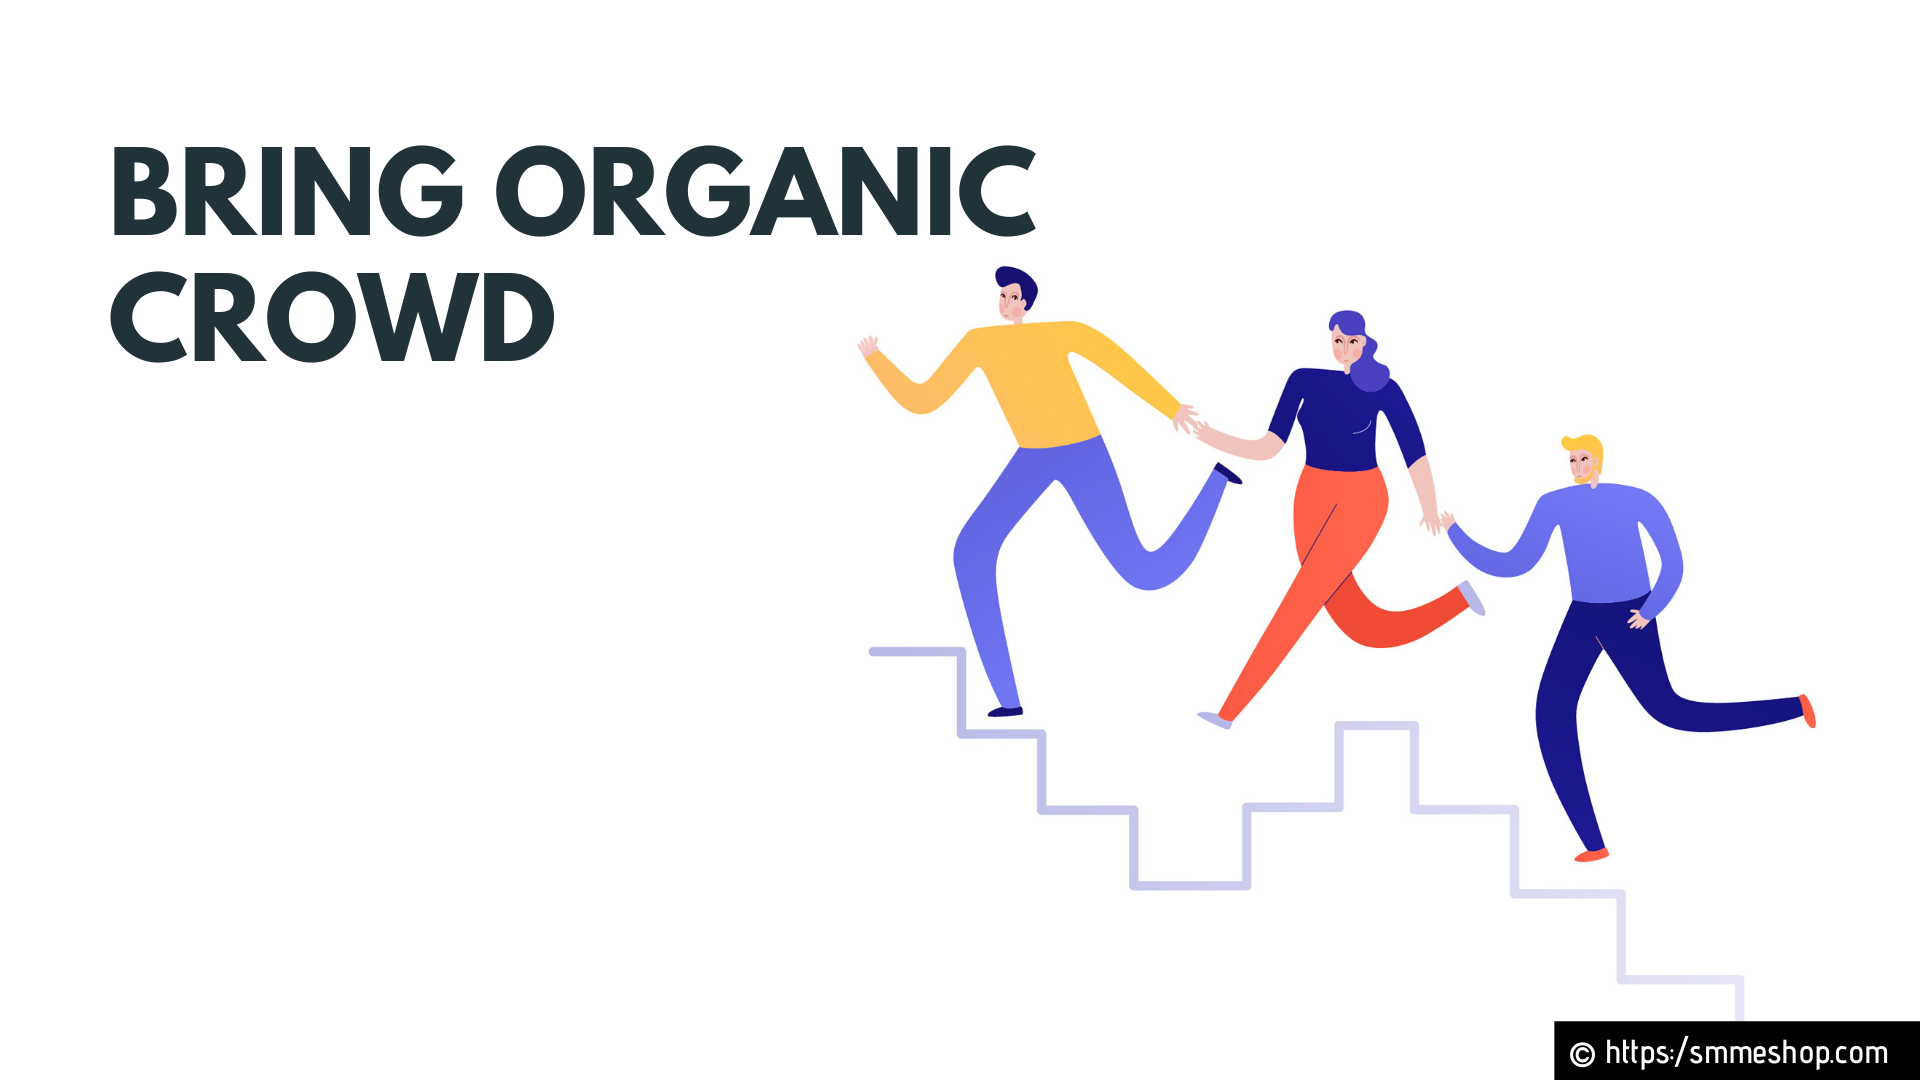 Bring organic crowd